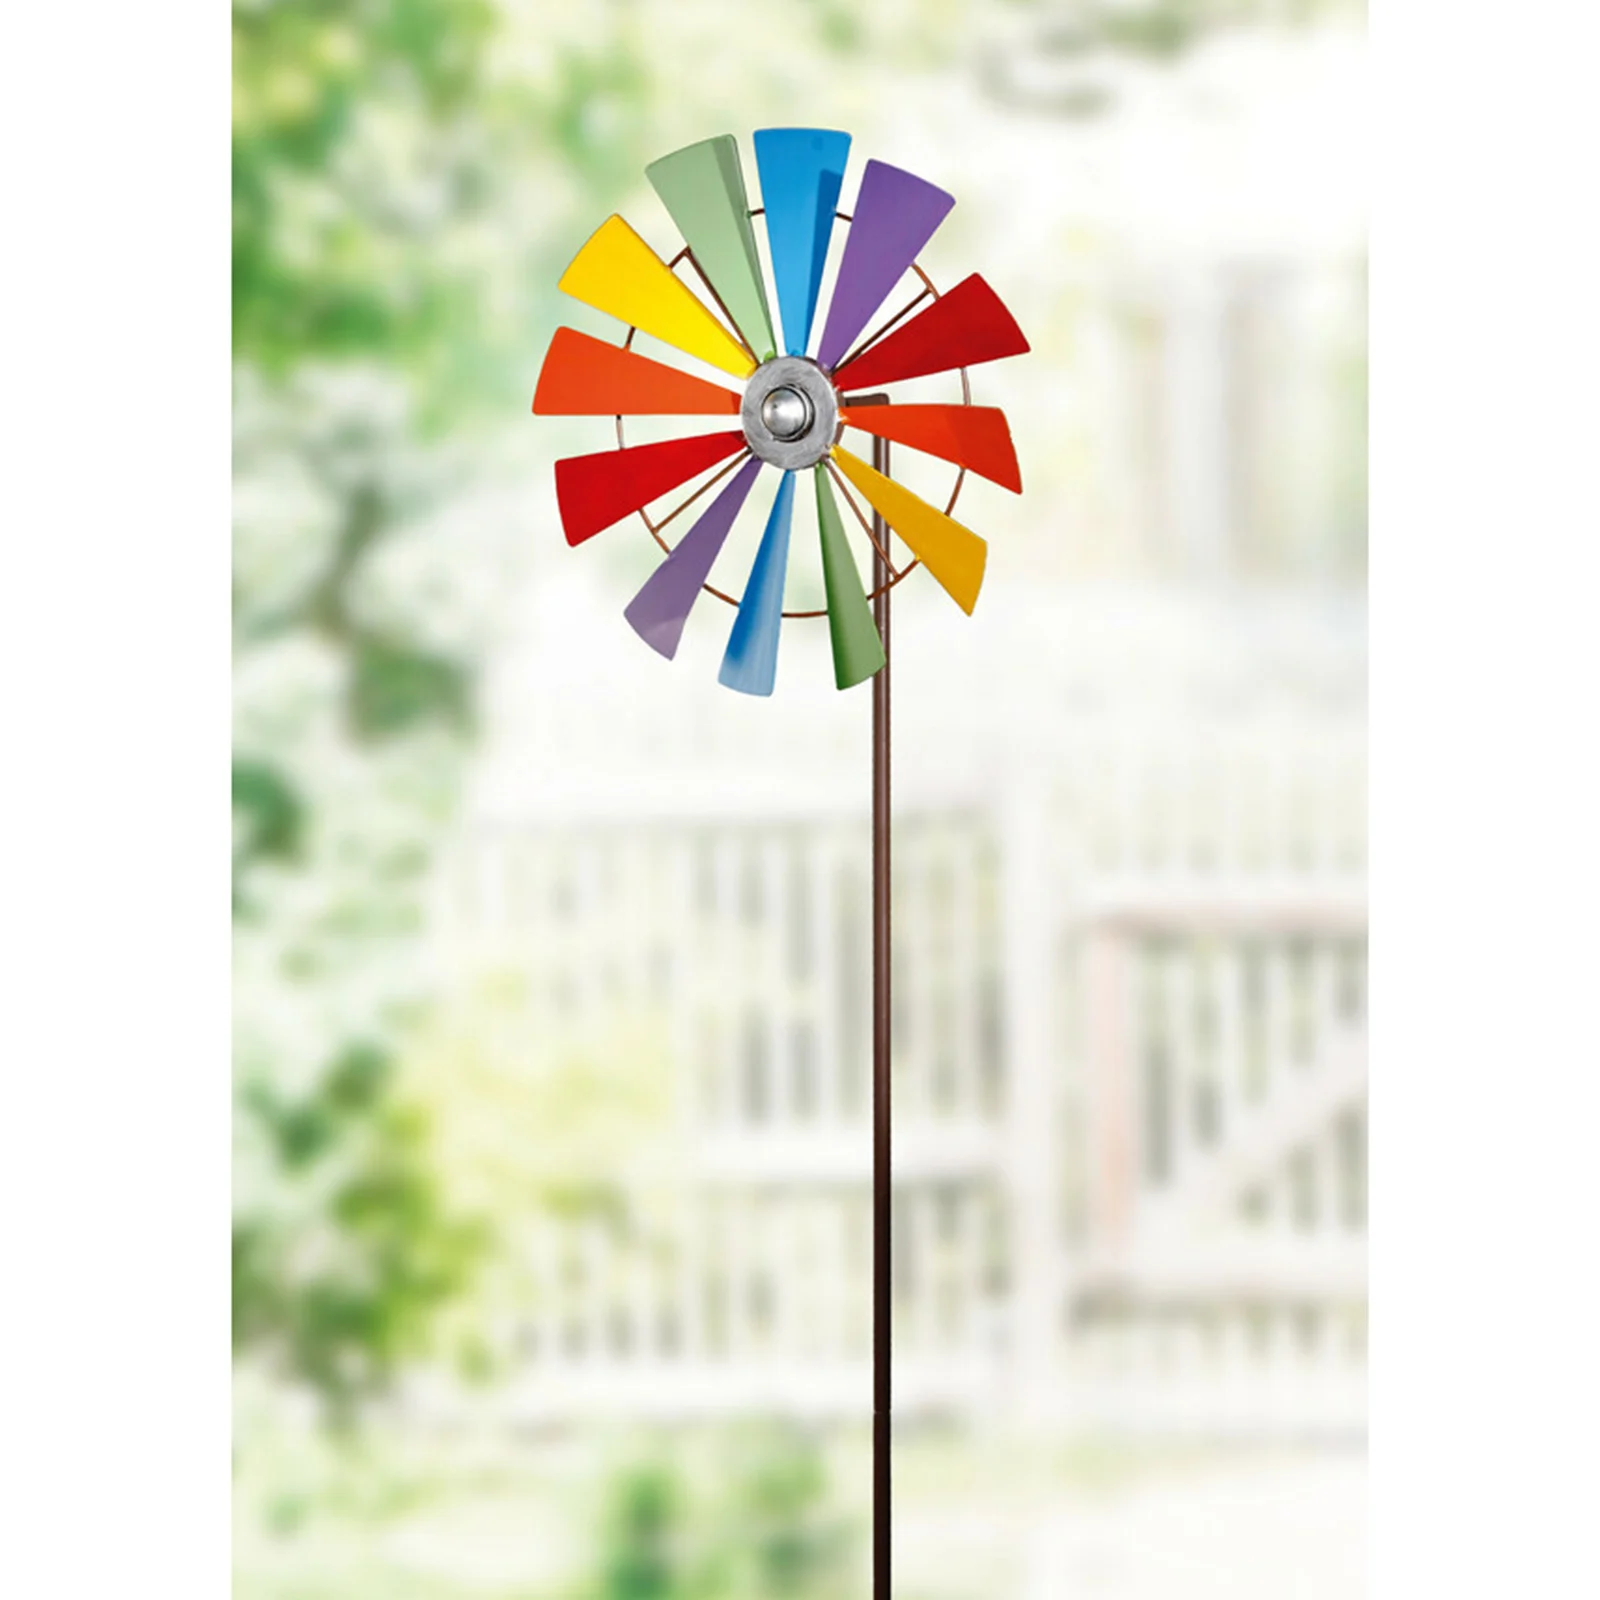 2 x Large 2 Tier Rainbow Flower Windmill Garden Ornament 38cm Diameter 